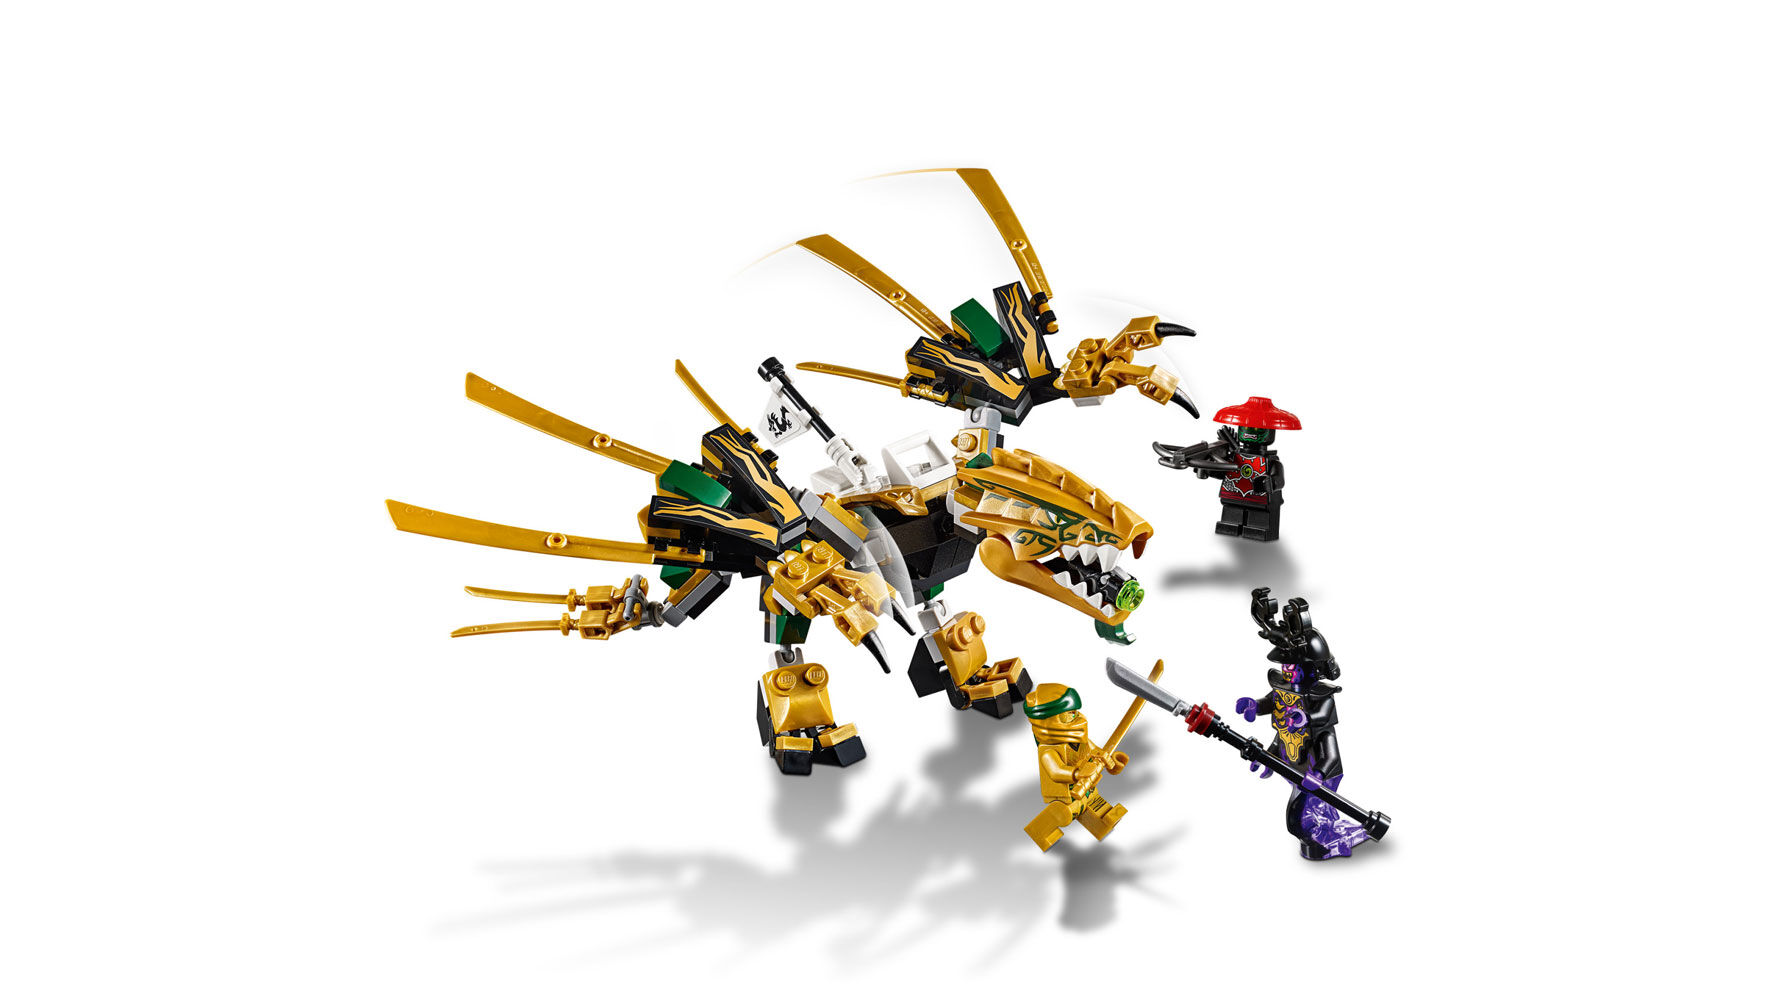 golden dragon ninjago lego set